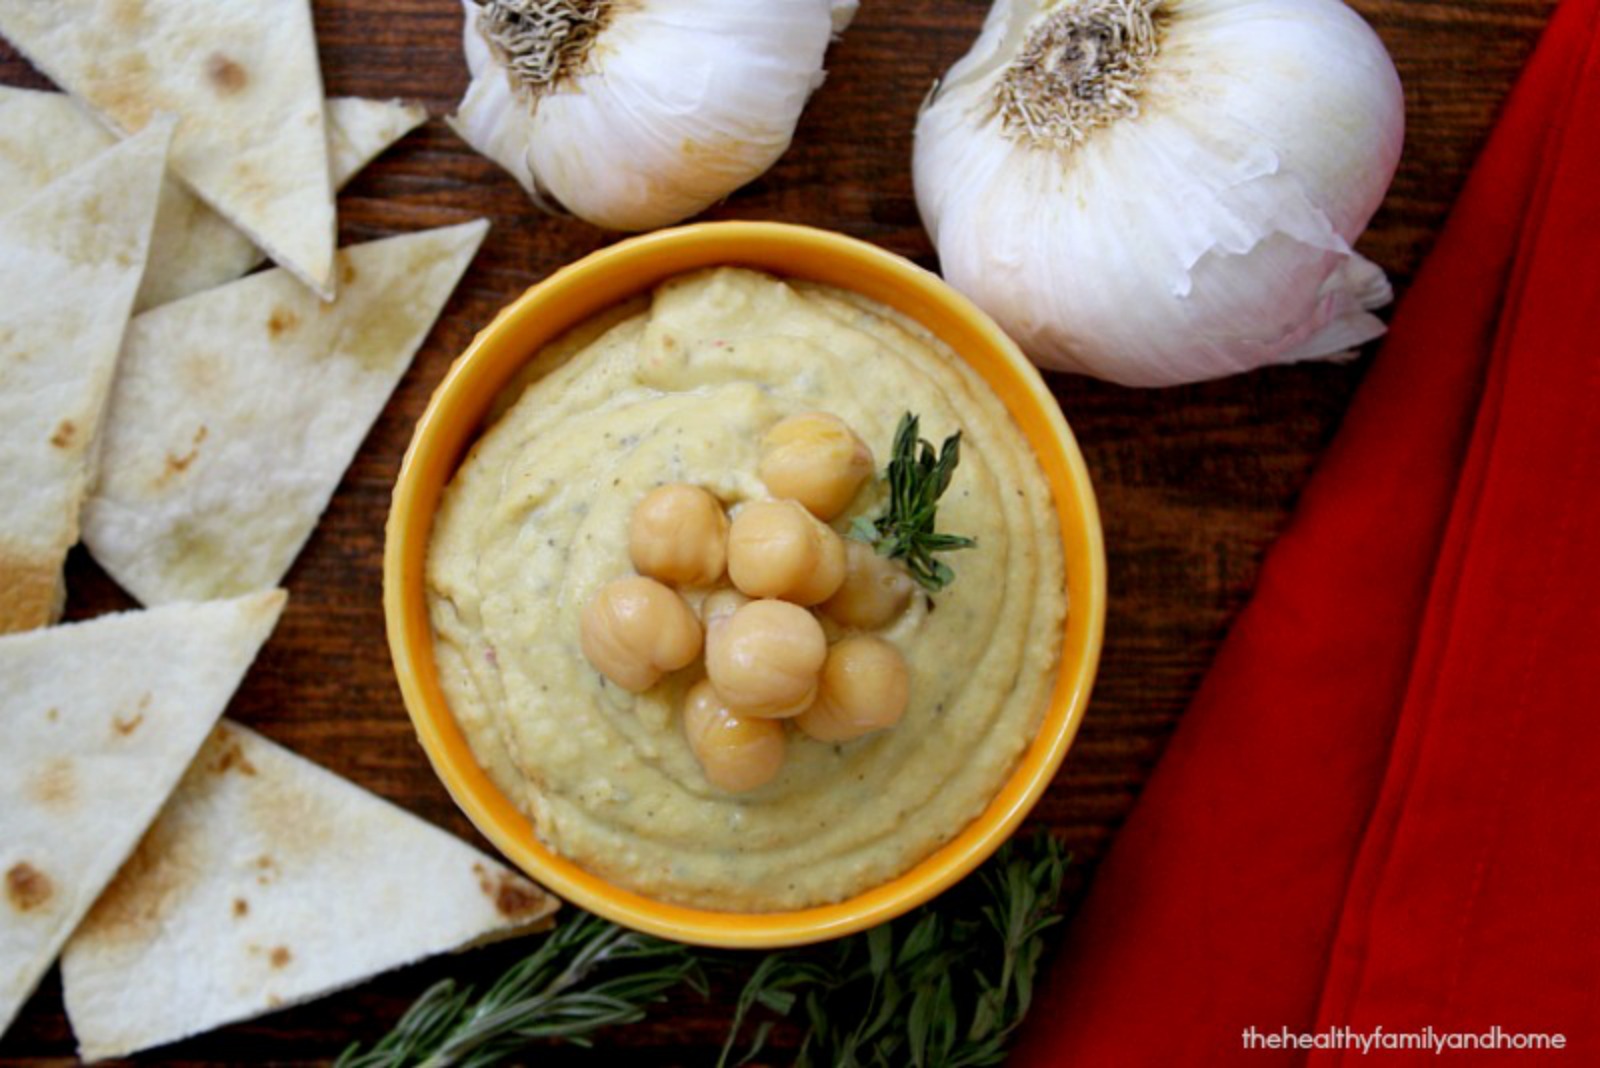 Rosemary with Roasted Garlic Hummus